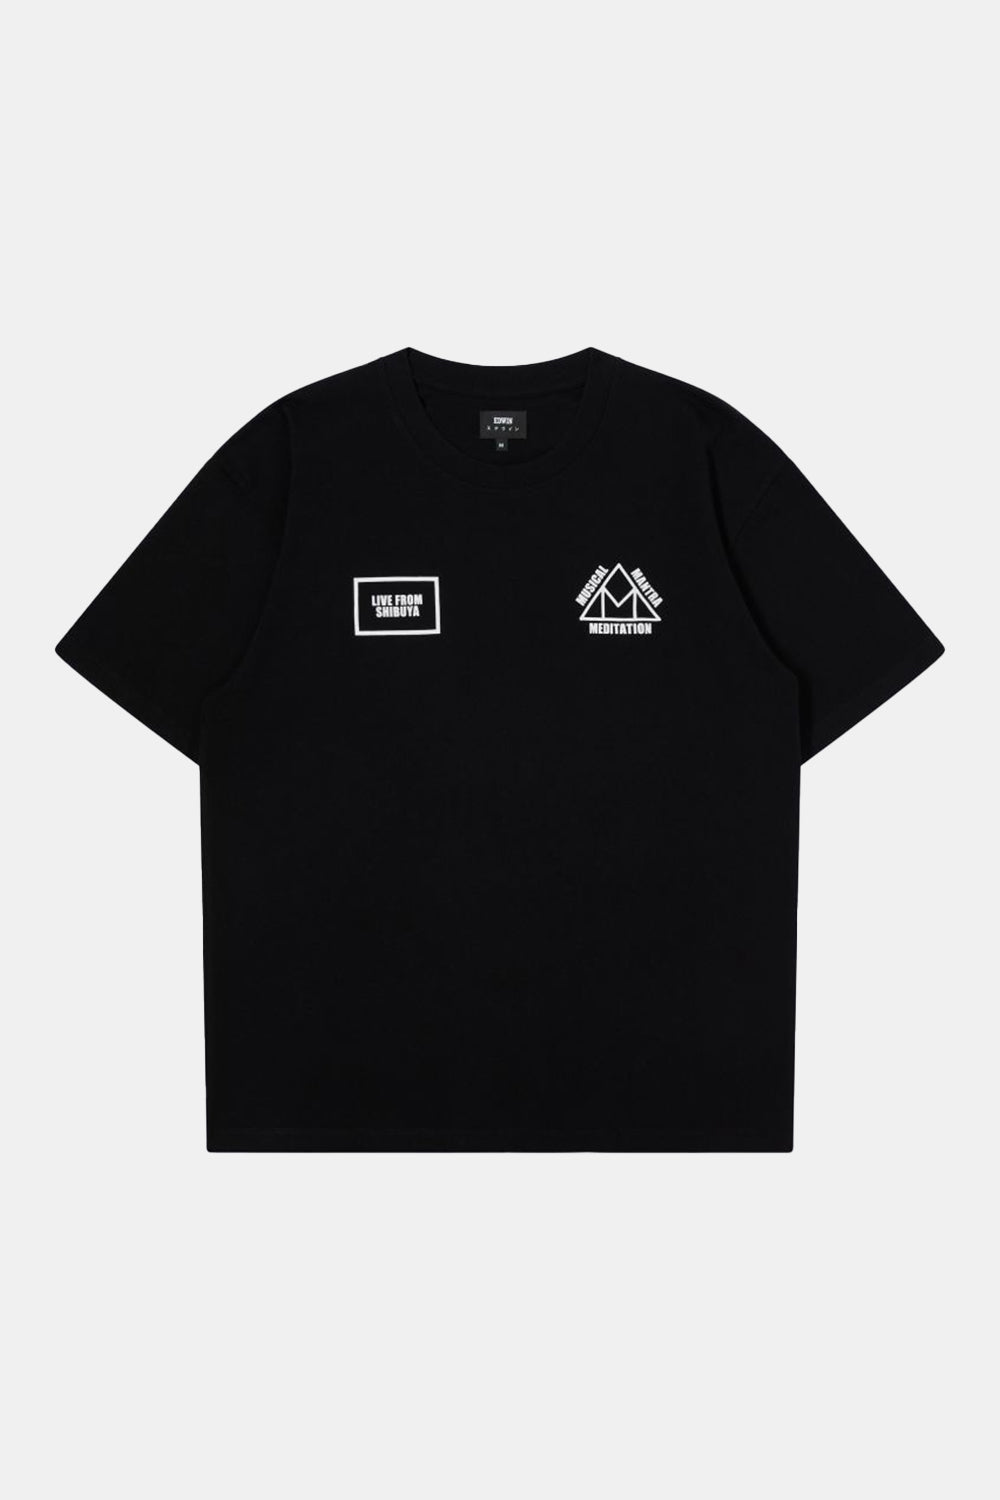 Edwin Jam T-Shirt (Black)